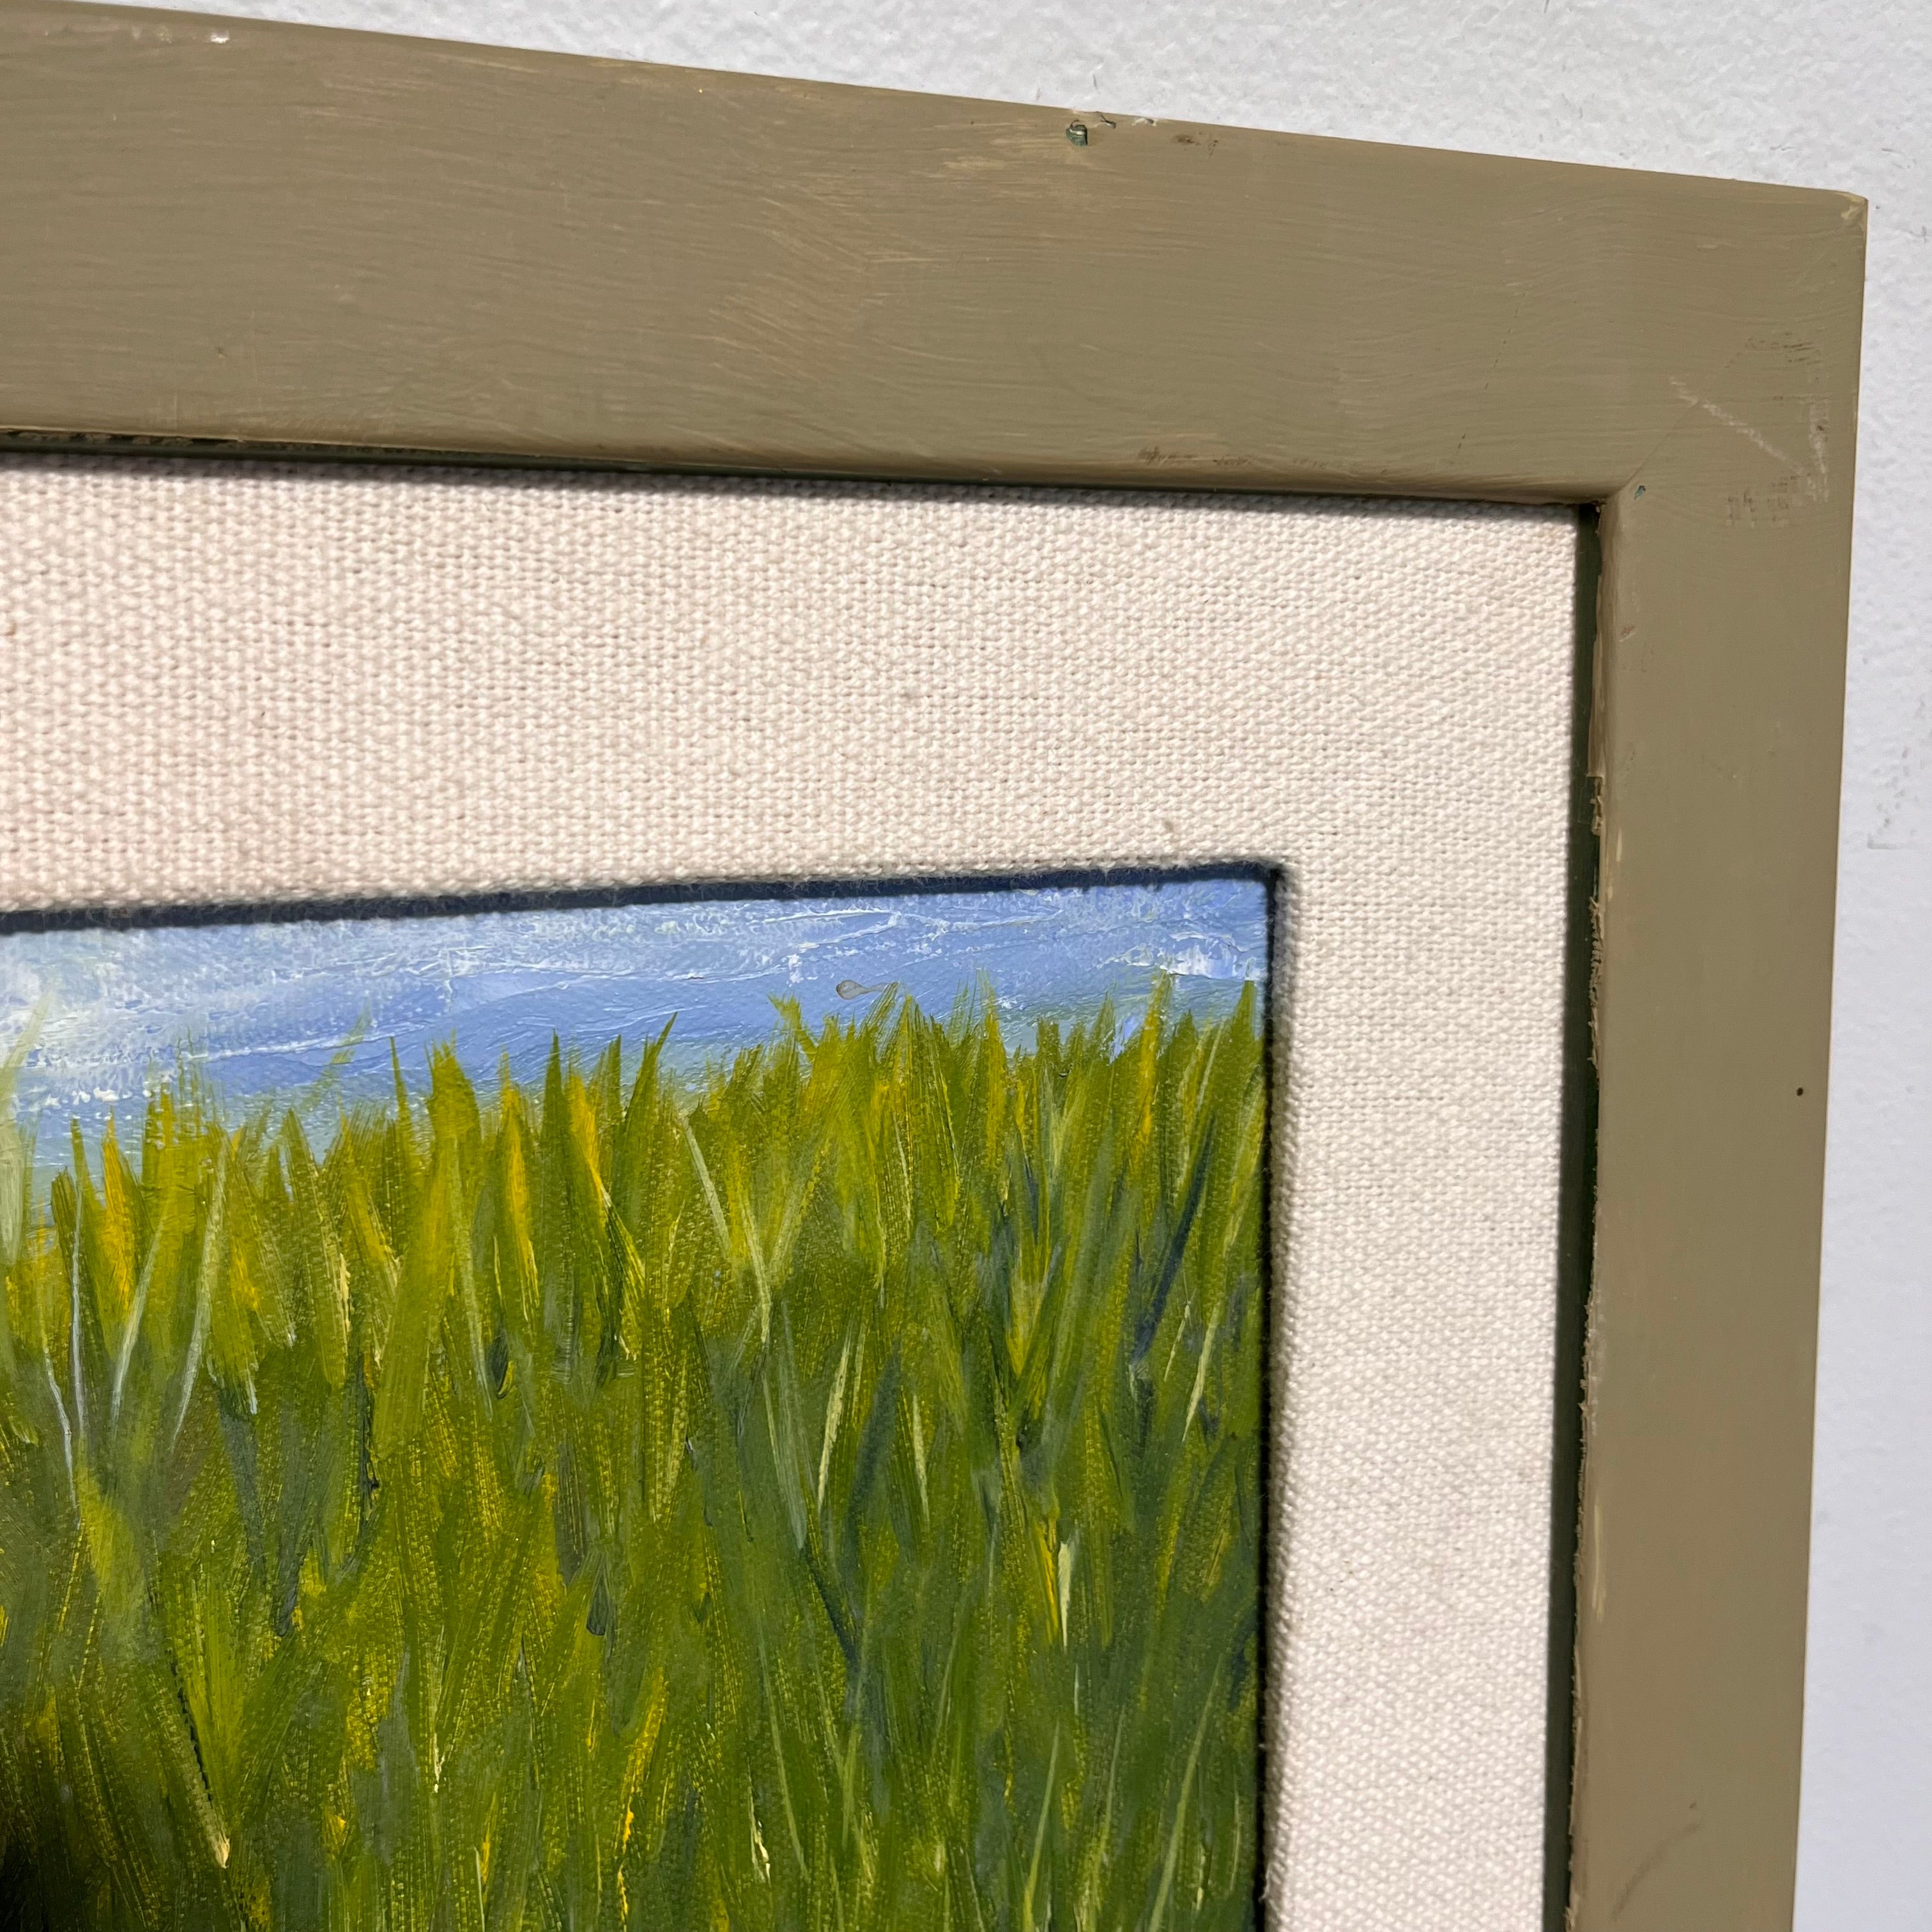 Marsh Grasses Original Oil Painting on Canvas Wall Art  25.75"x 22"